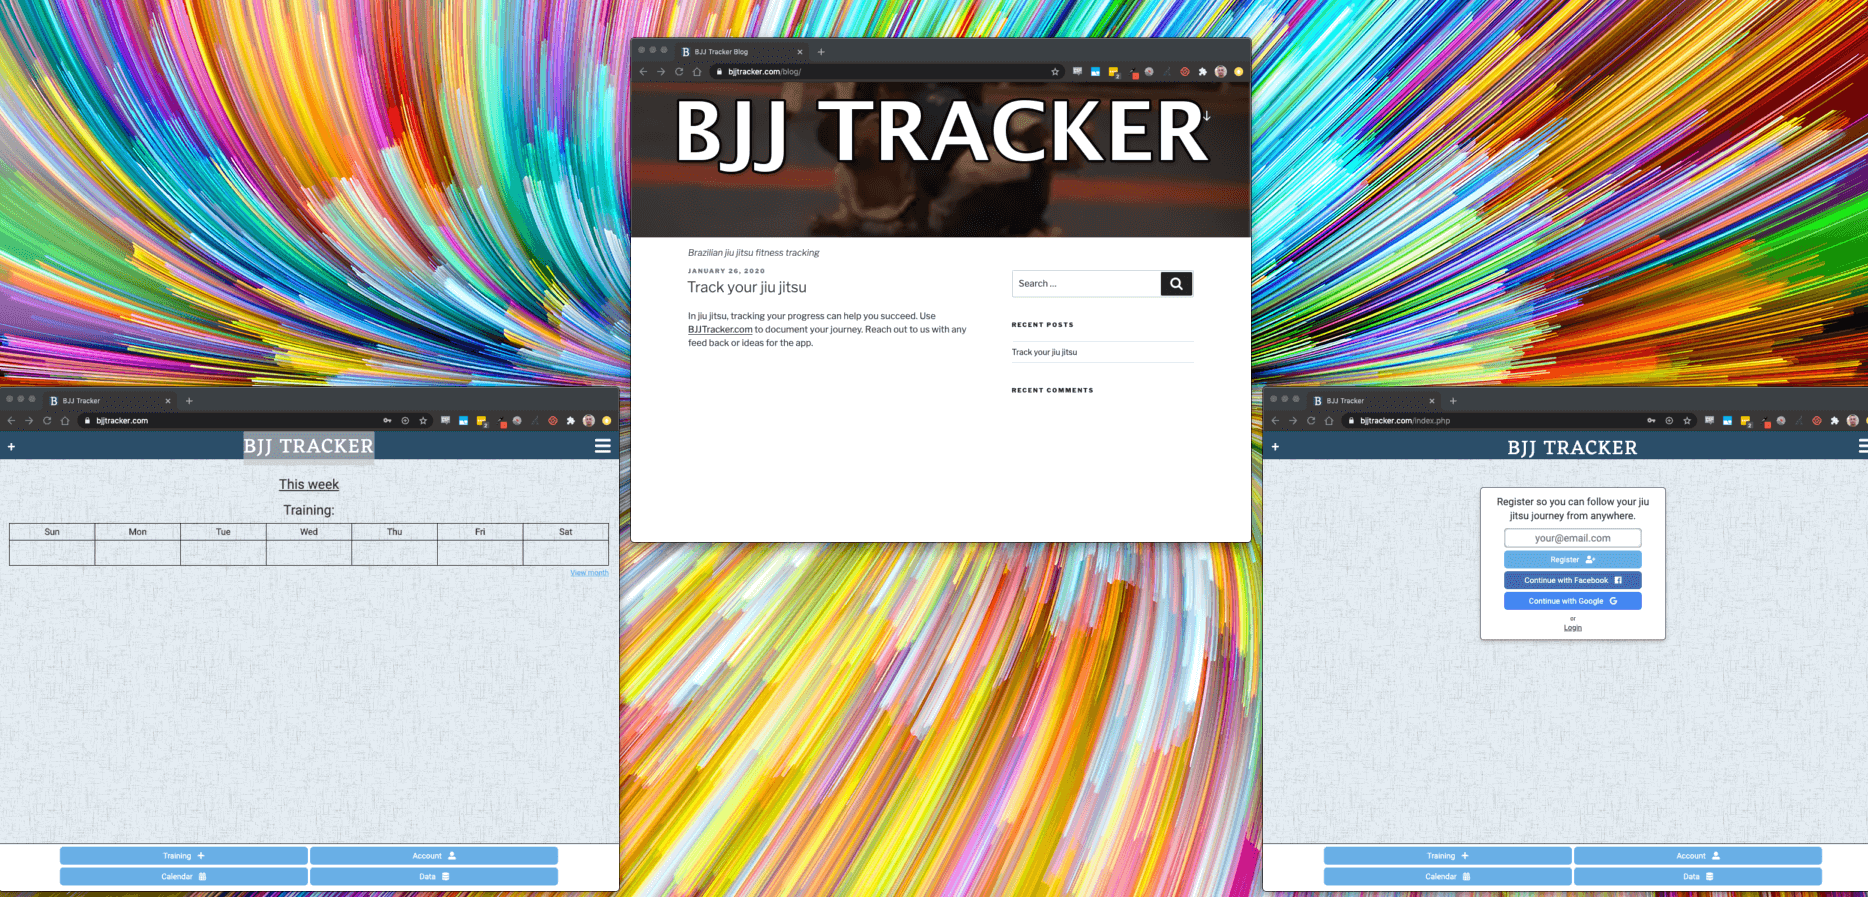 BJJ tracker, a fitness app